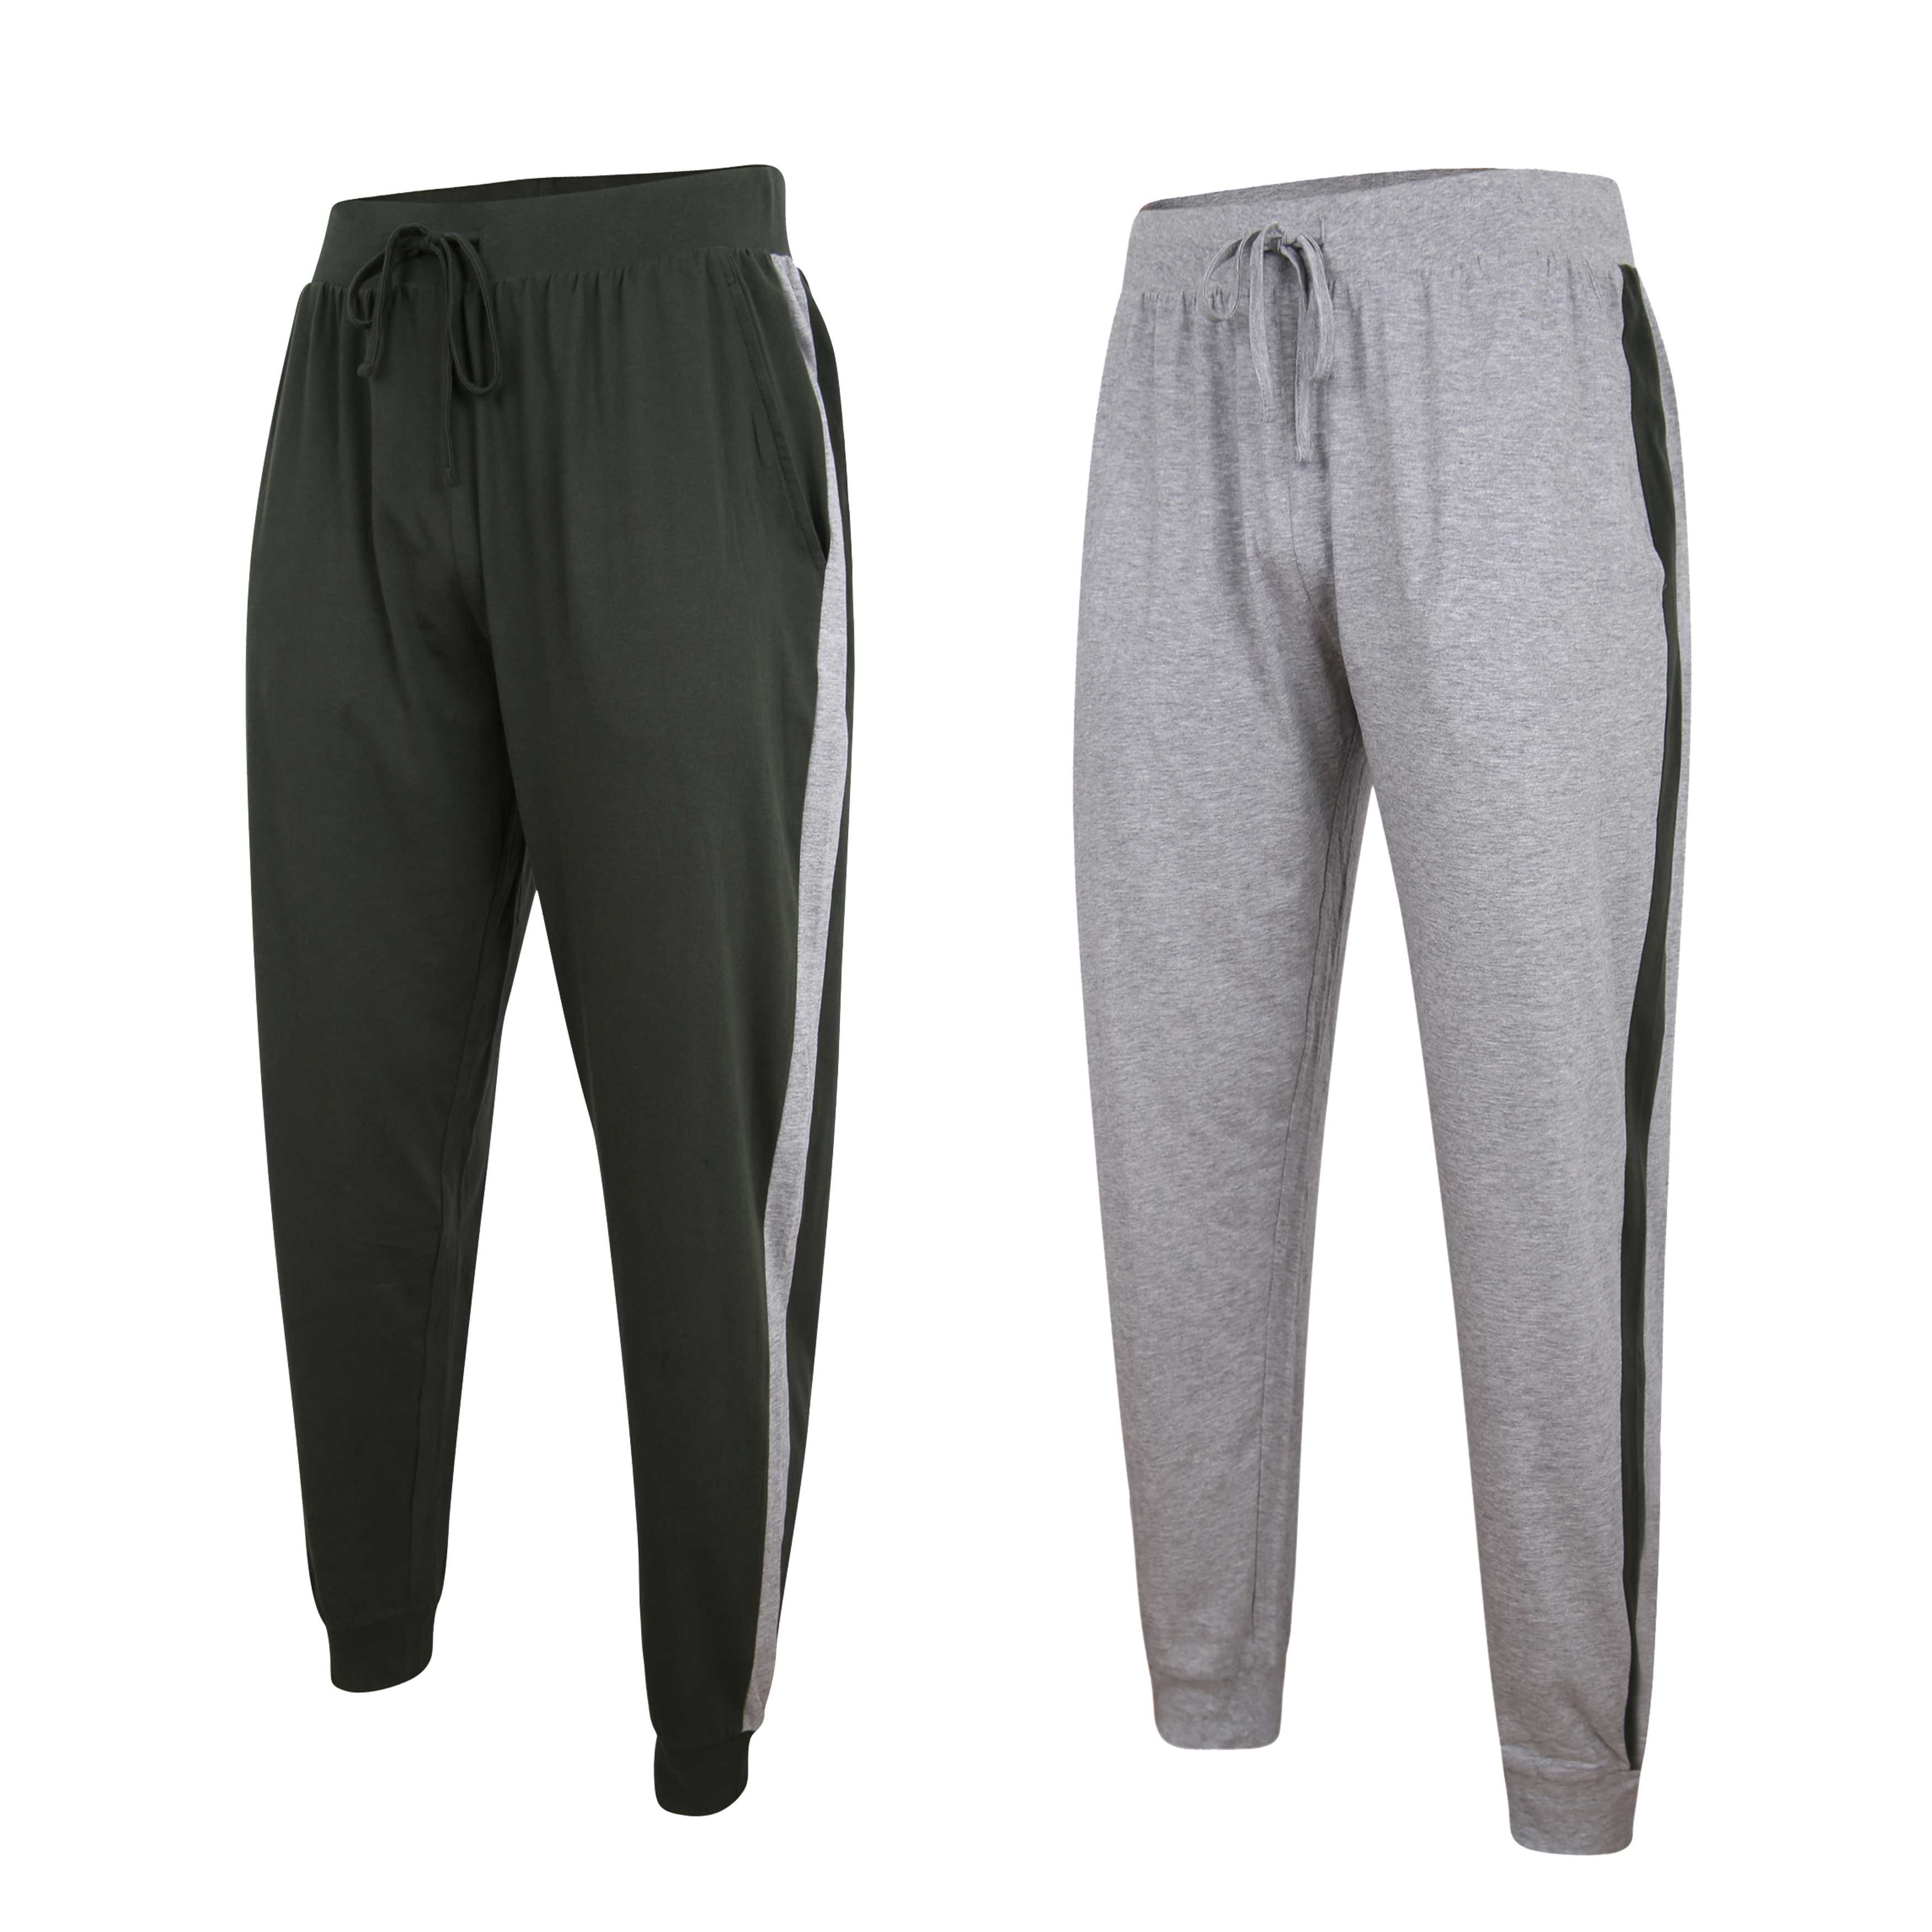 The Essentials Wardrobe Mens 2 Pack Lounge Pants Pyjamas Nightwear Loungewear Trouser Bottoms Size S-XL 